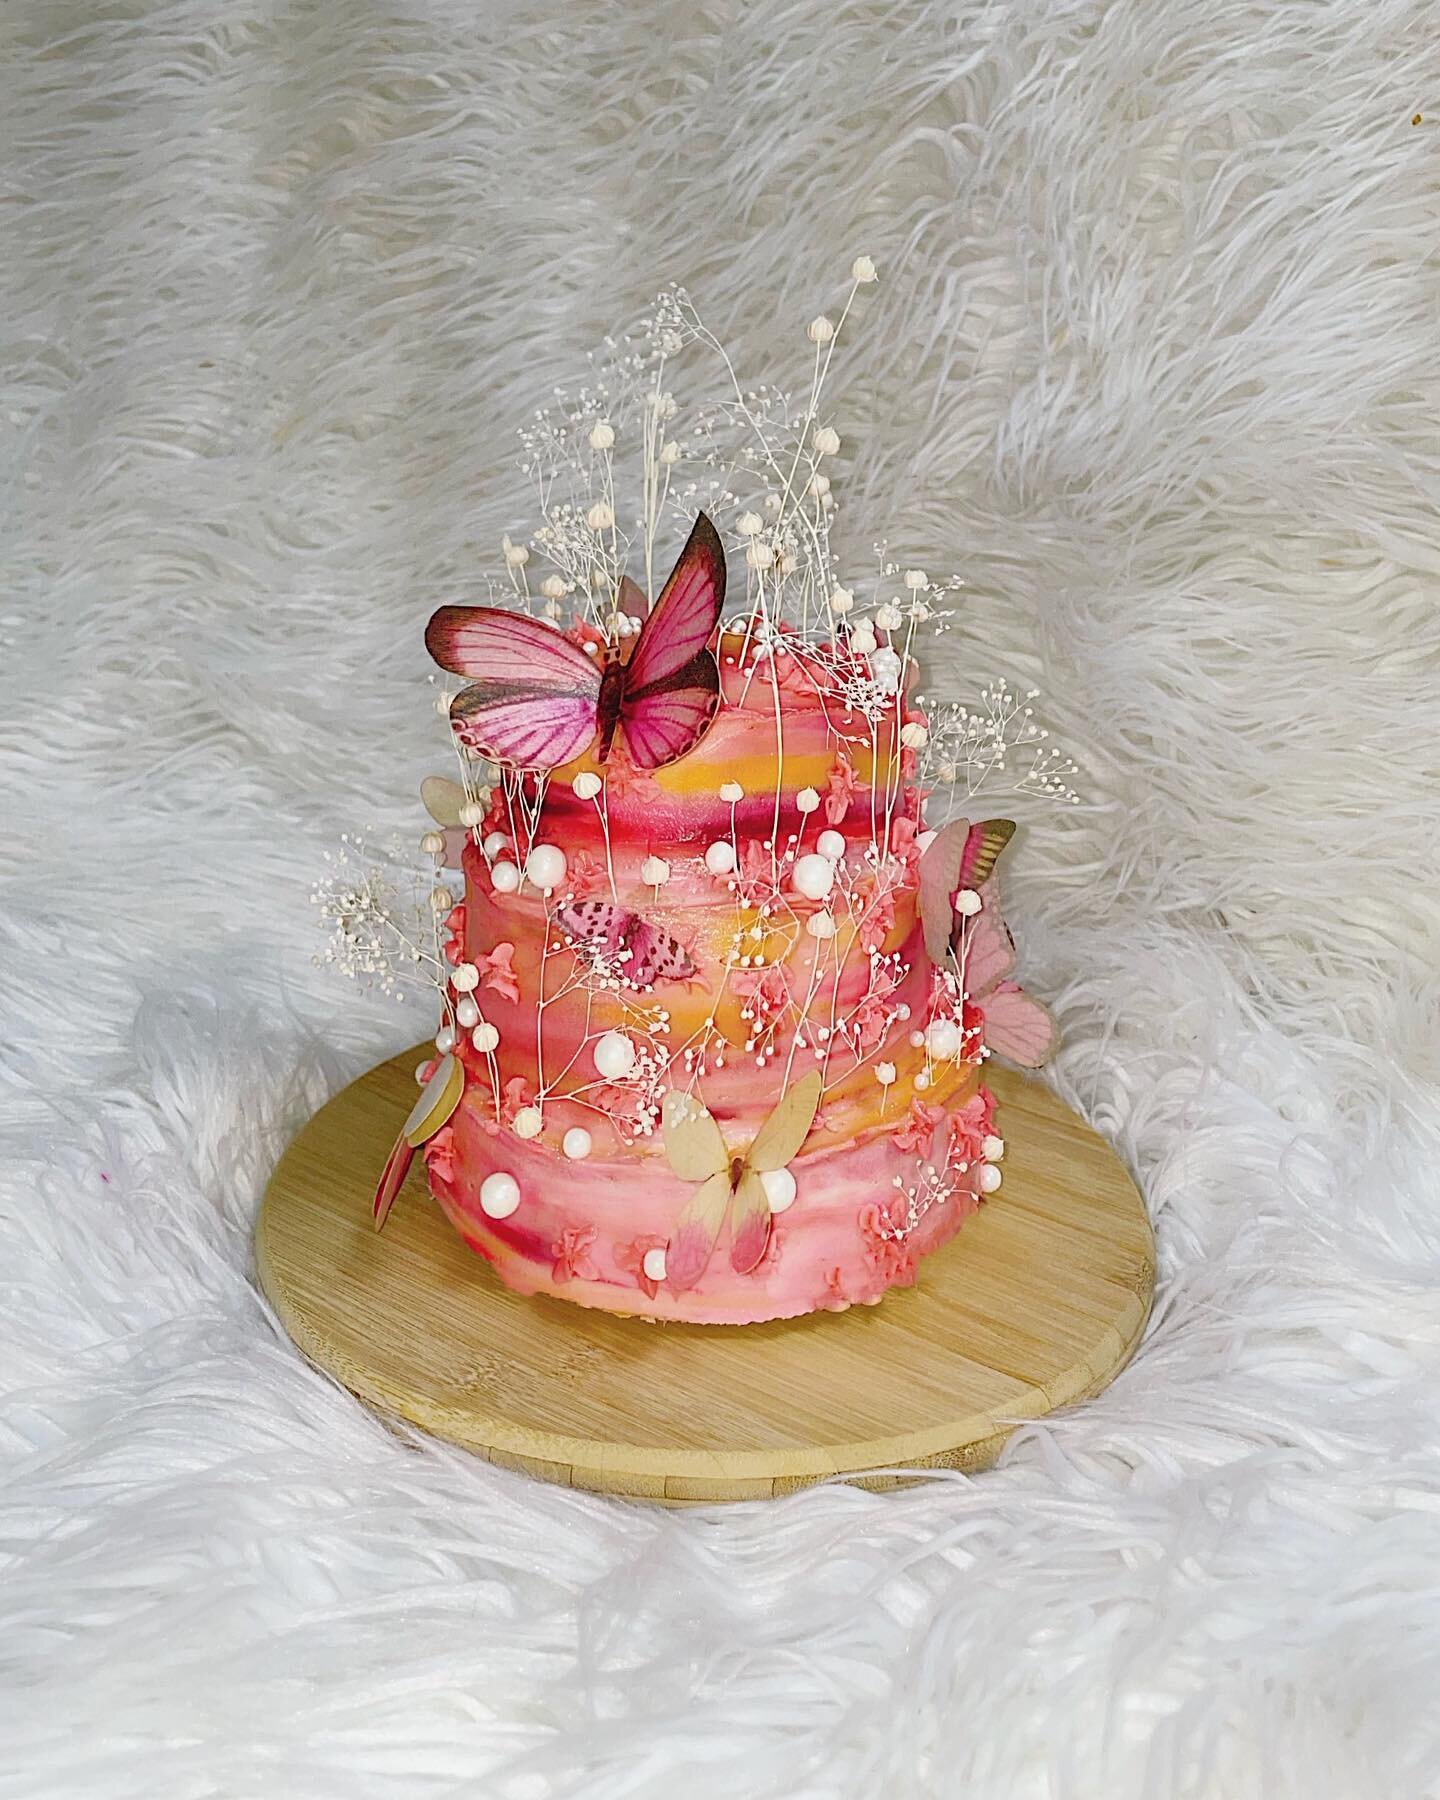 ｡ 💐  𝒮𝓊𝓃𝓈𝑒𝓉 𝓂𝒶𝑔𝒾𝒸 💐 ｡ gf vanilla cake with cherry compote 💛

#cake #cakedecorating #cakes #birthdaycake #chocolate #food #dessert #cakesofinstagram #birthday #cakedesign #instafood #baking #foodporn #yummy #cakestagram #homemade #love #